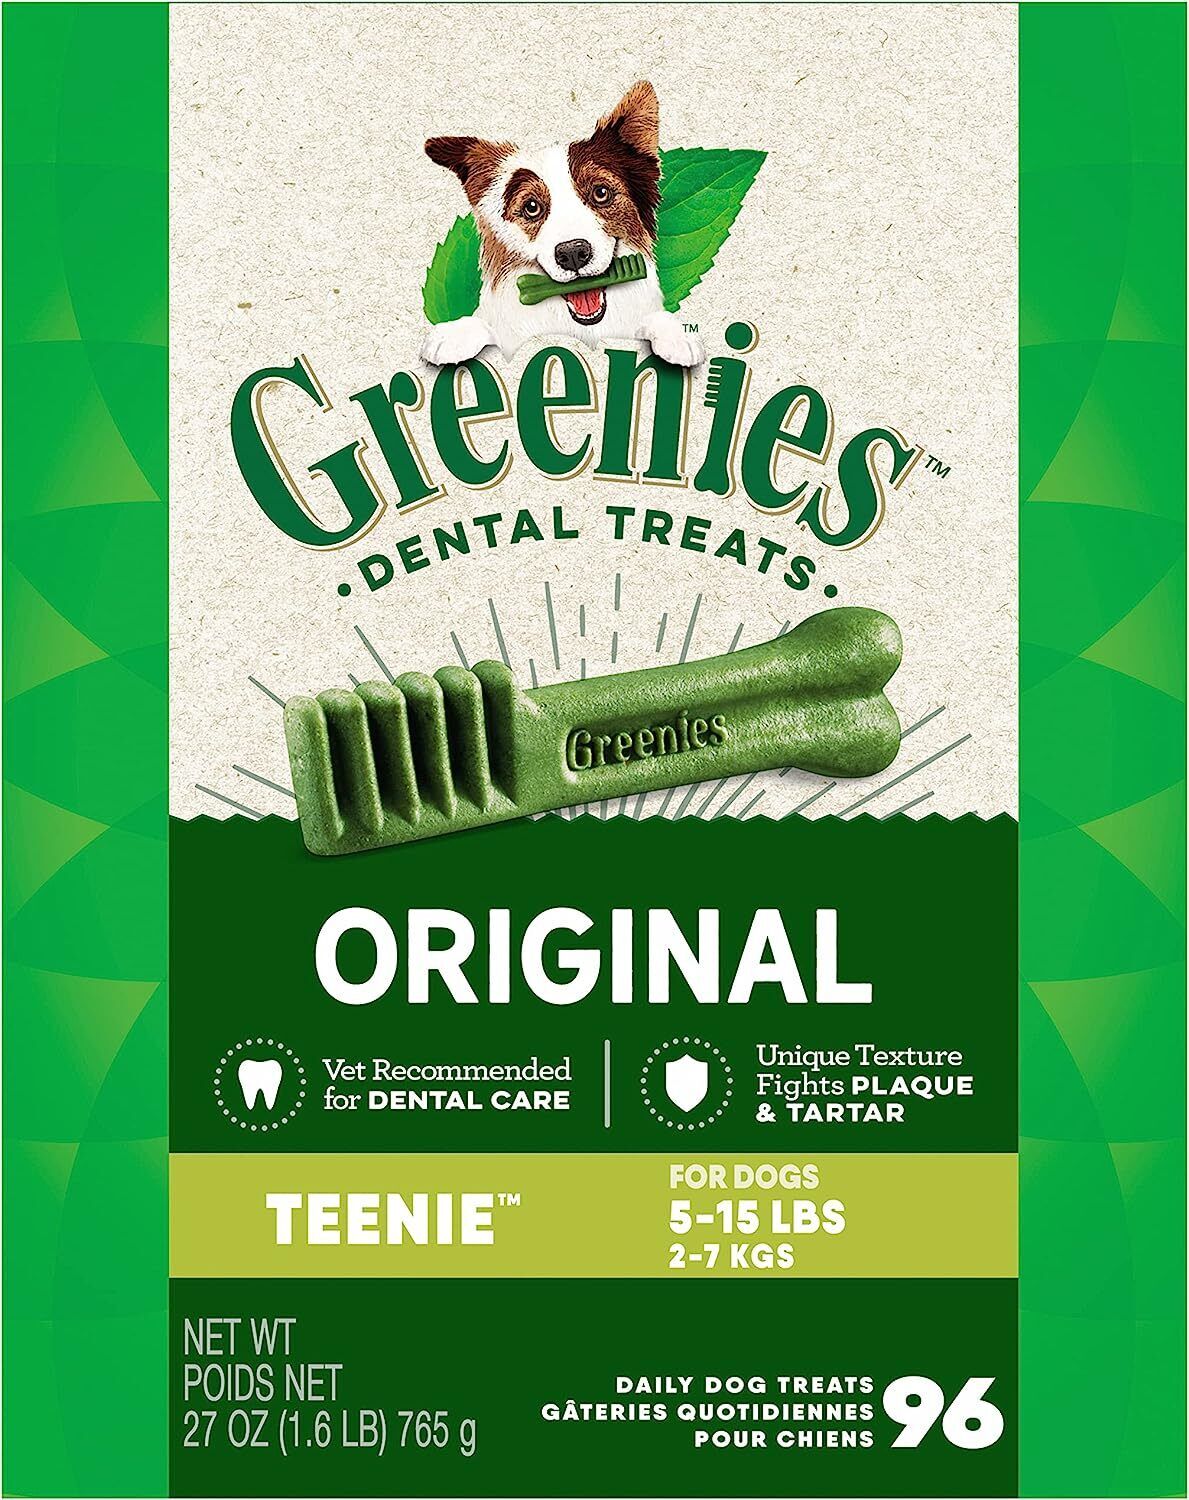 Greenies Original Dental Chew Teenie Size 96 Count - 12 Pack